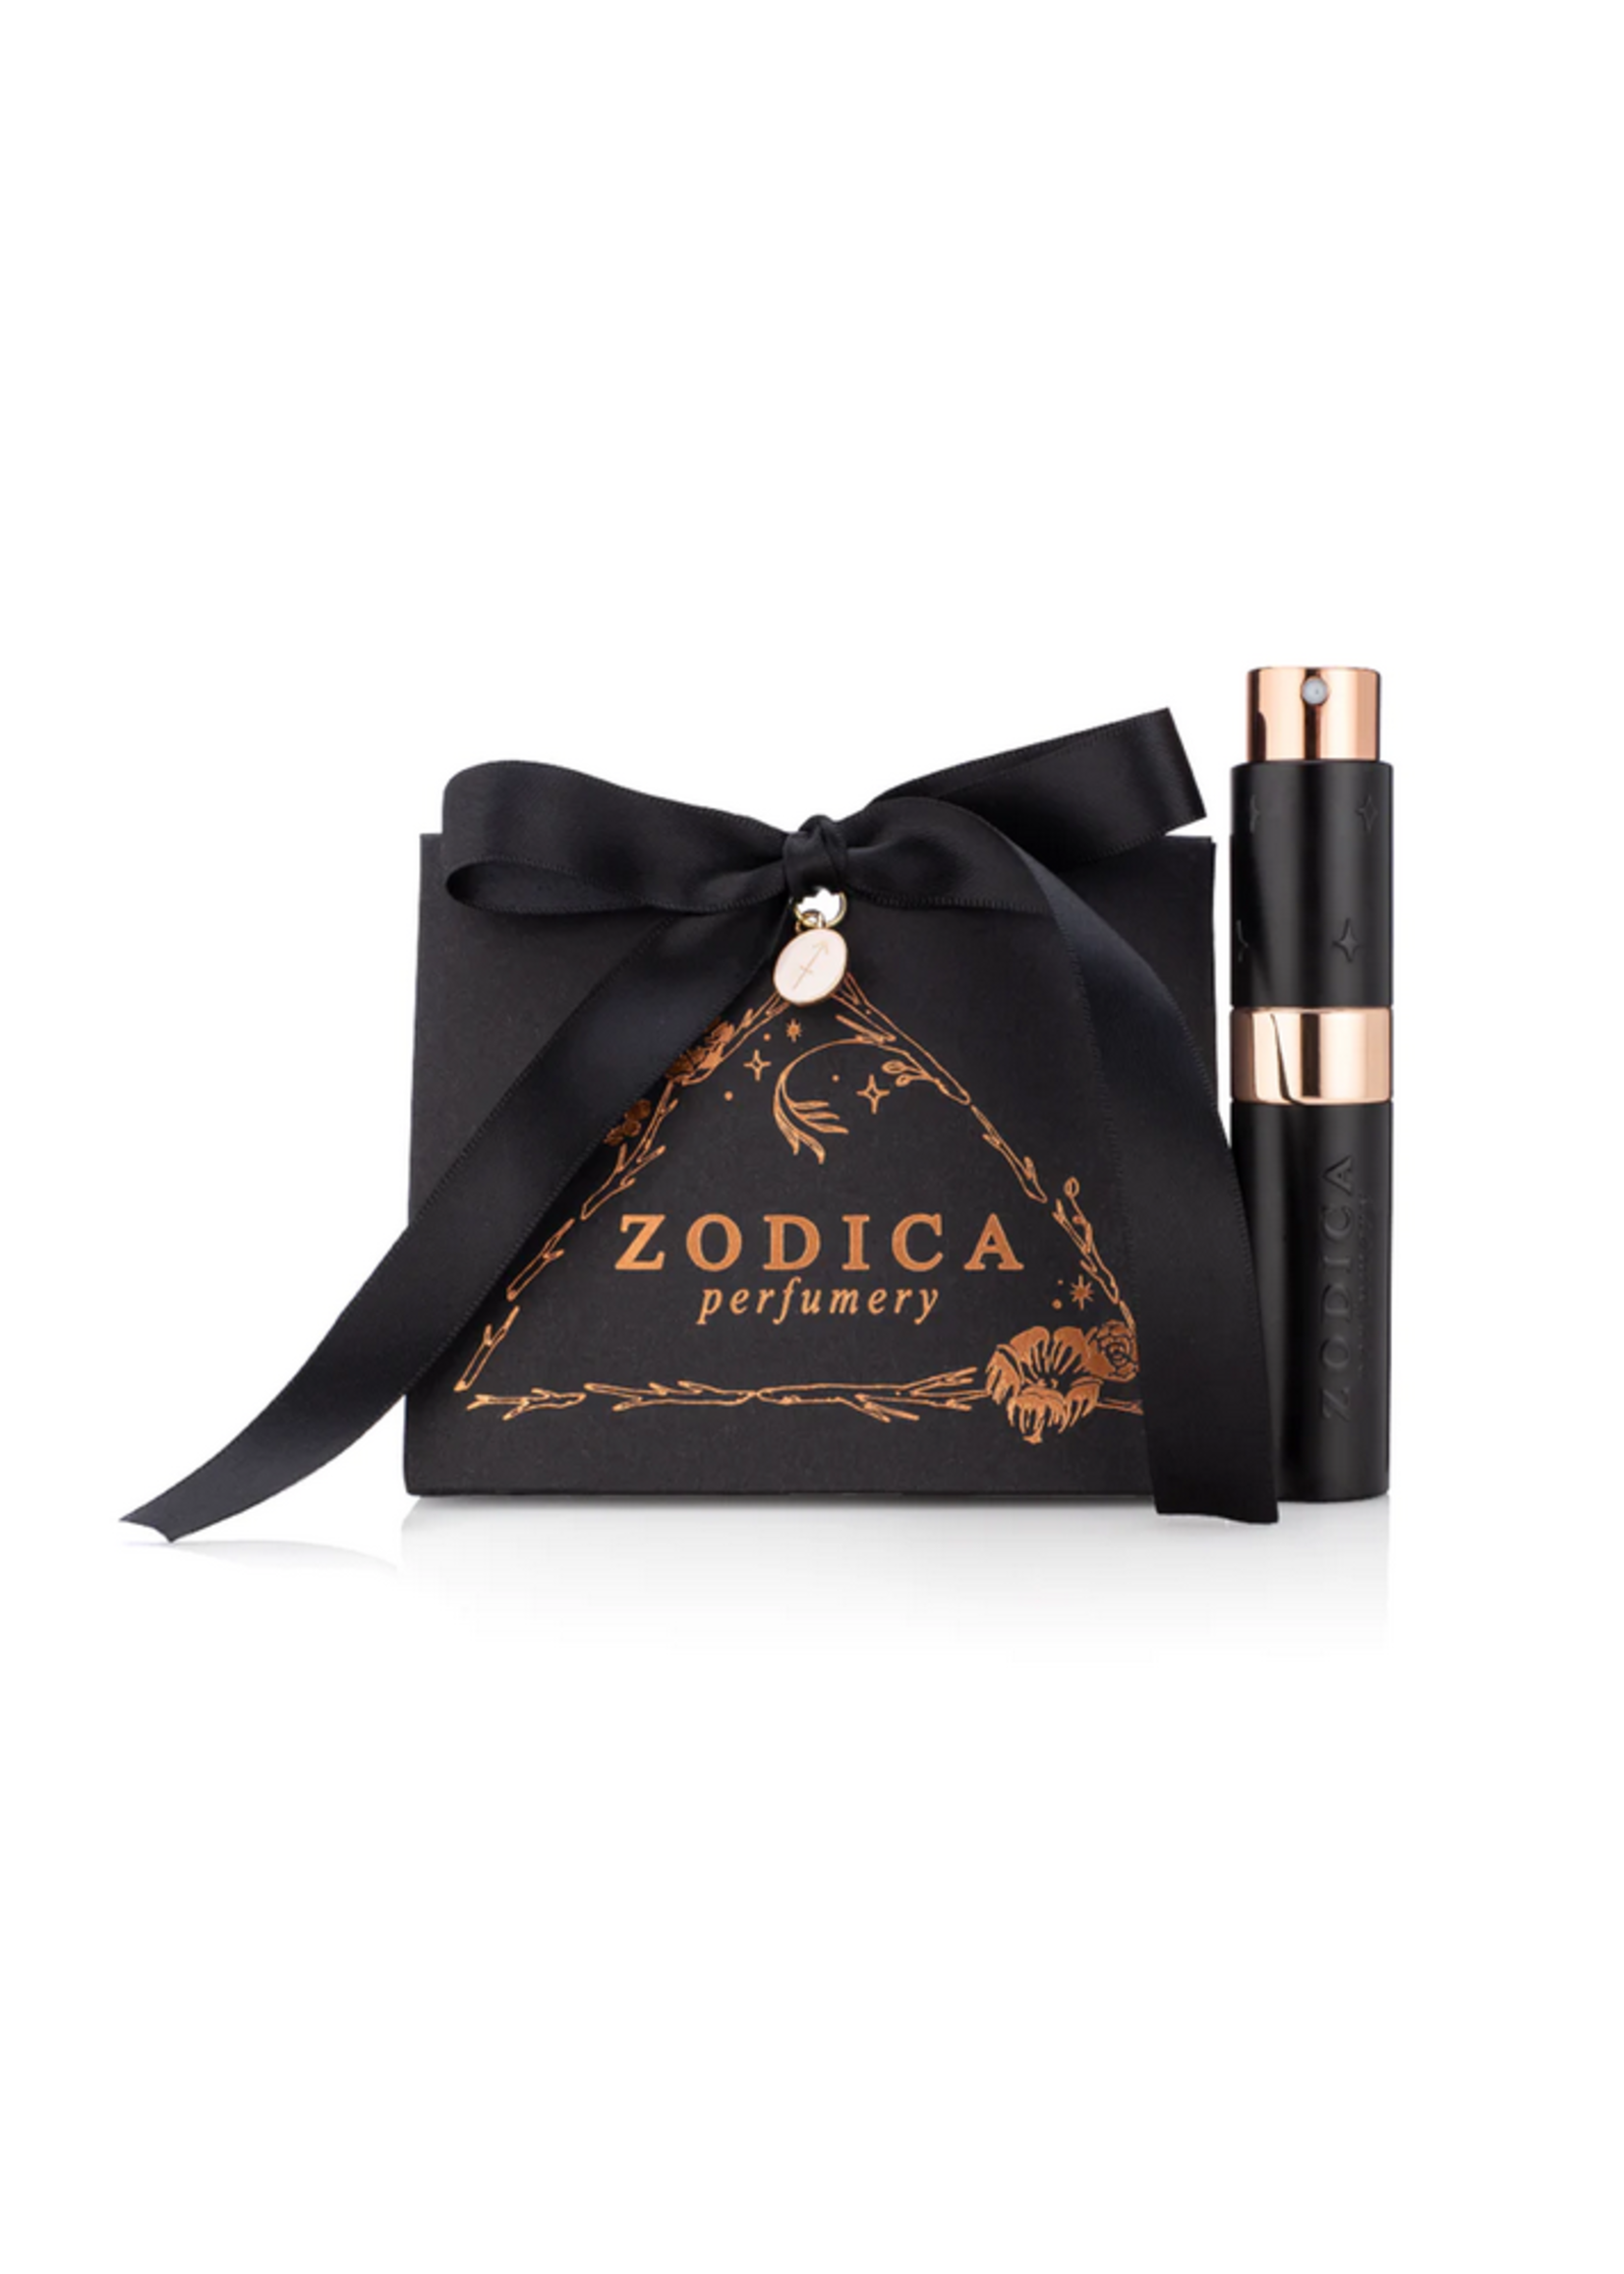 Zodica Perfume Twist & Spritz Travel Spray Gift Pisces